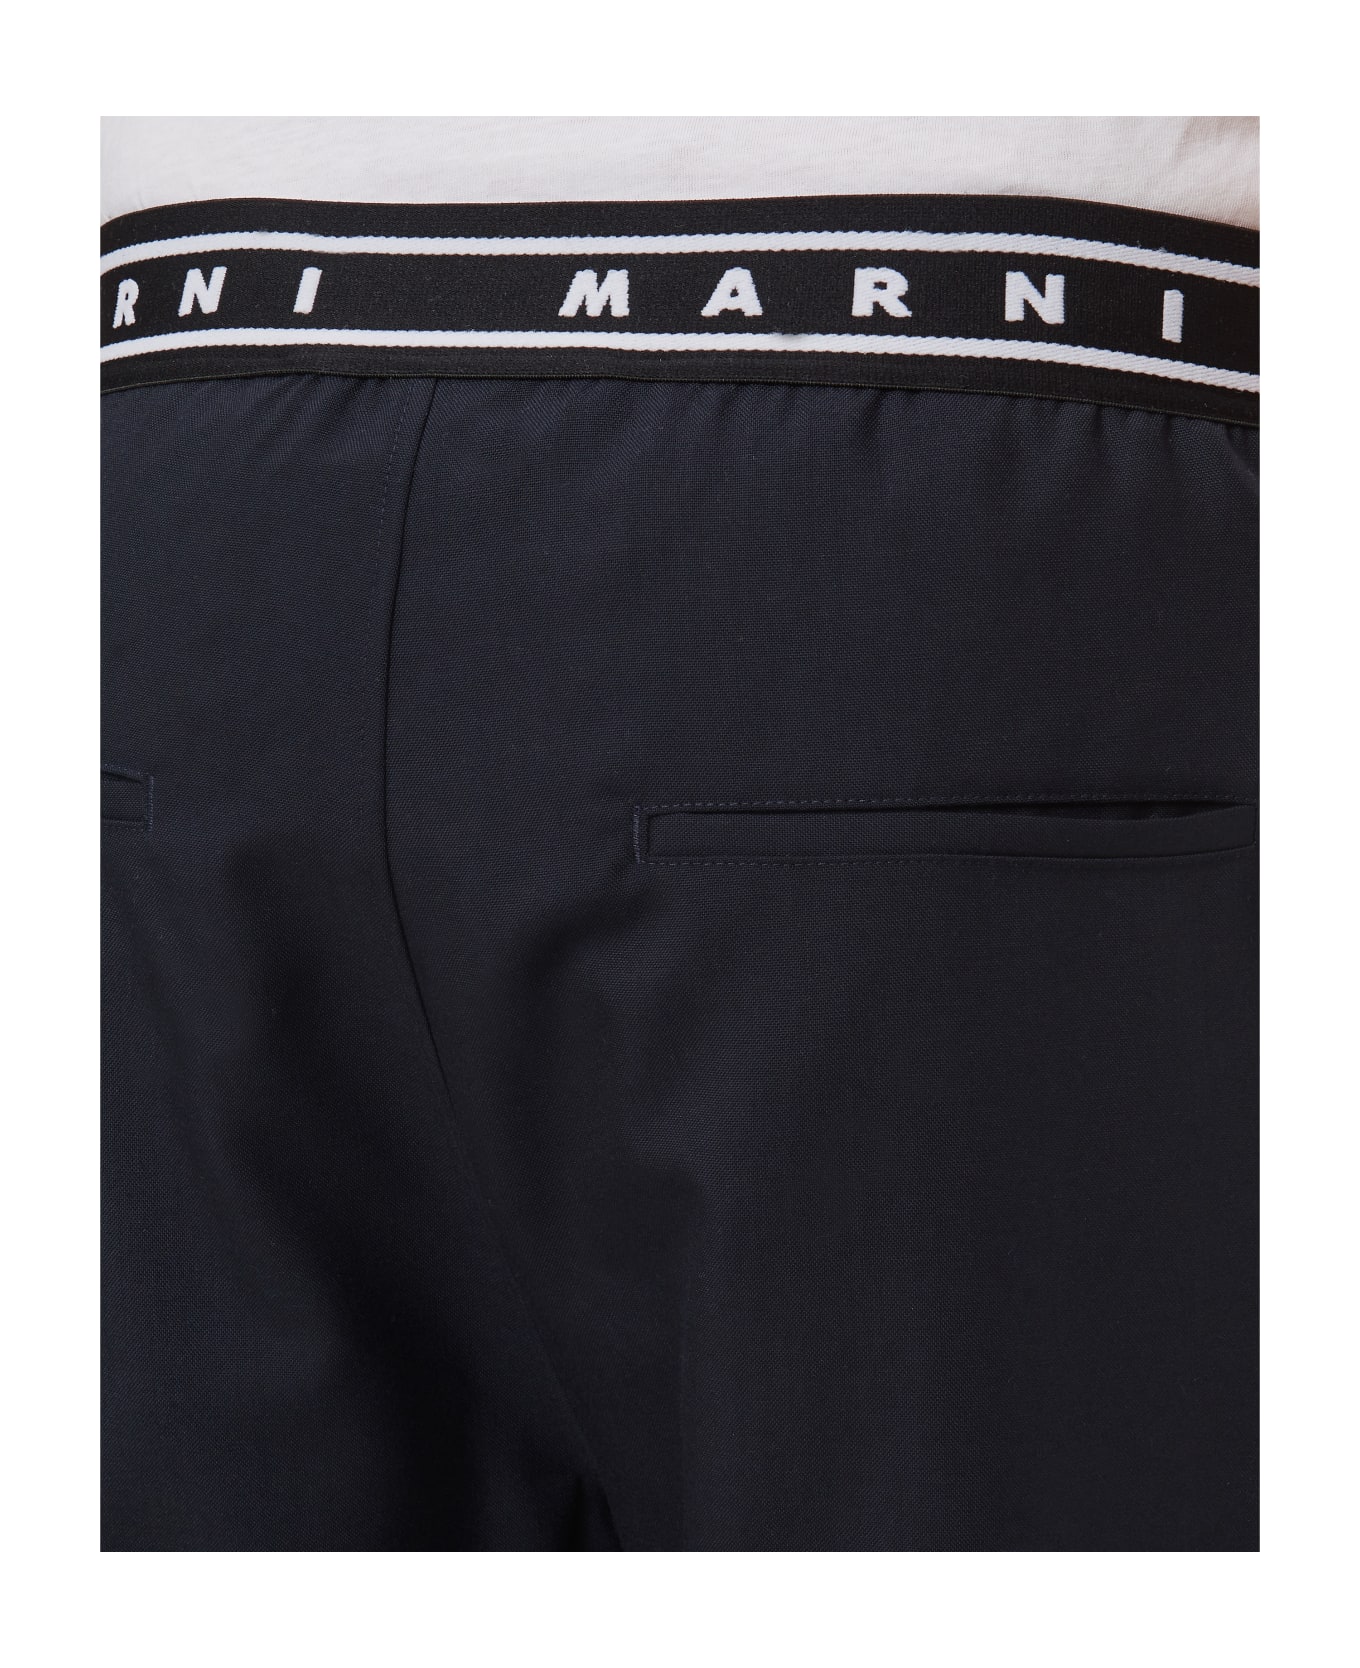 Marni Trousers With Marni Logo Waistband - Black